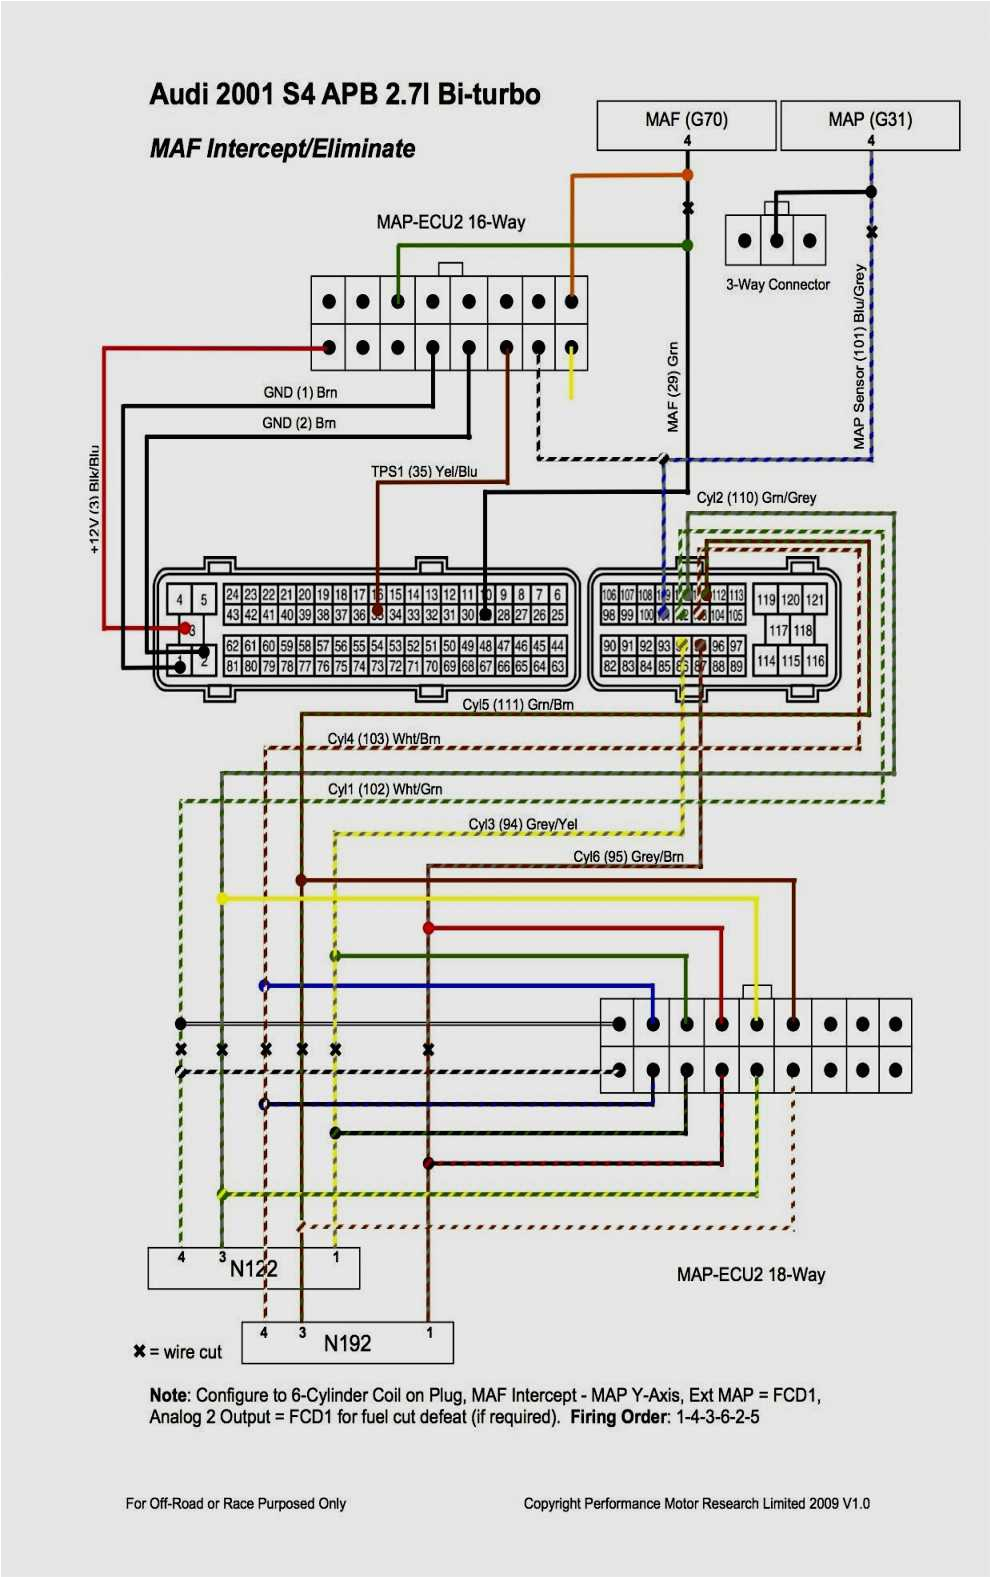 91 club car wiring diagram 91 ranger stereo wiring diagram car wiring diagrams explained u2022 rh ethermag co 1991 lincoln town car stereo wiring diagram